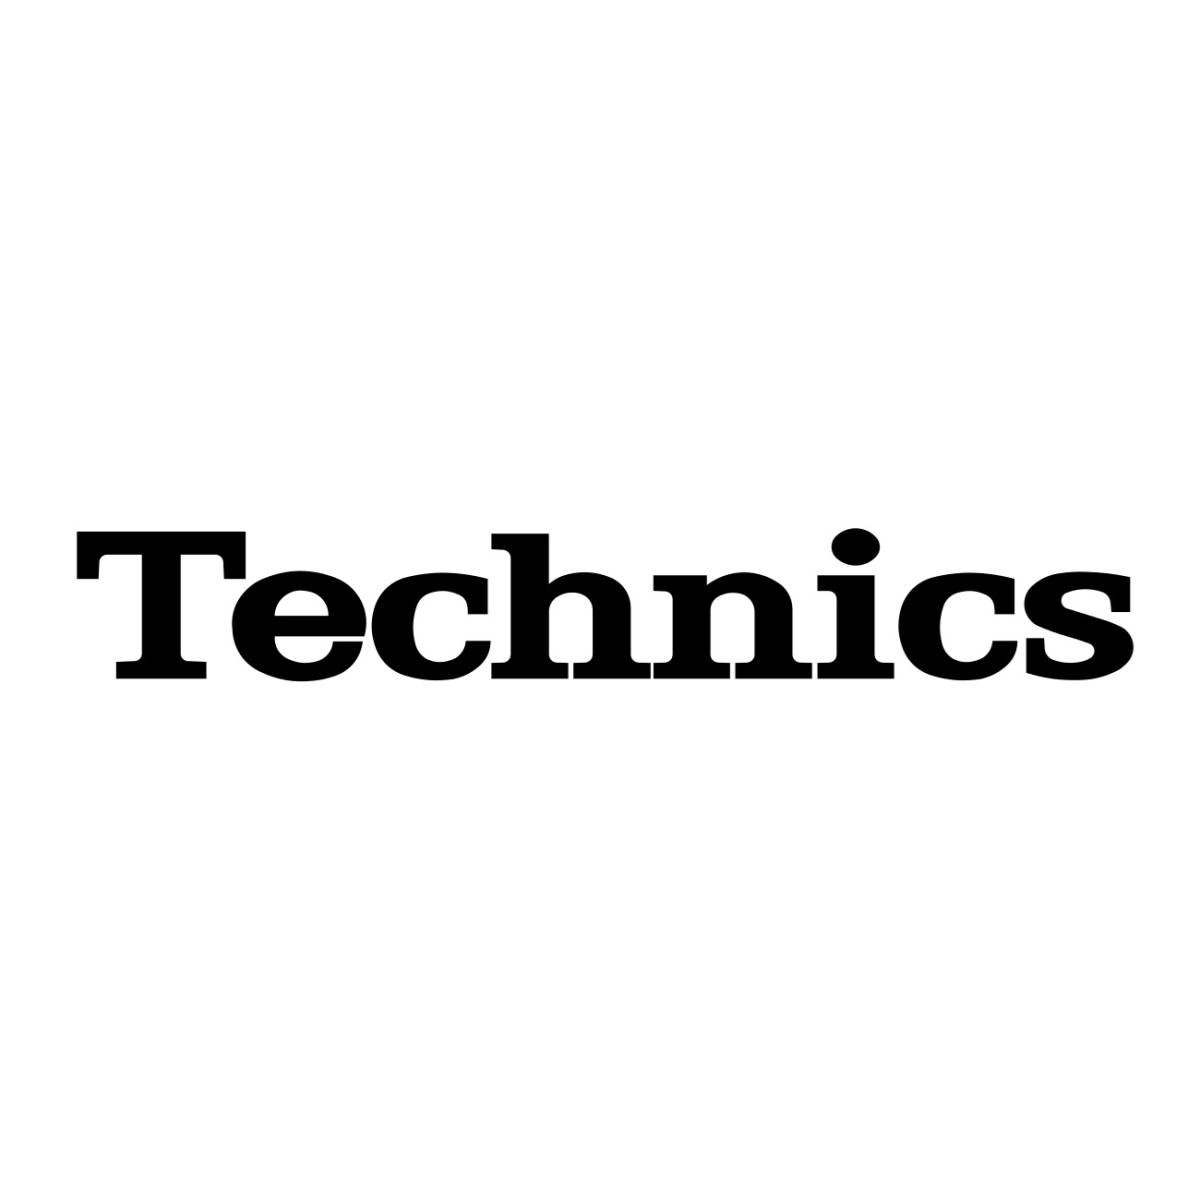 Technics Technics aluminium emblem plate silver / black tn